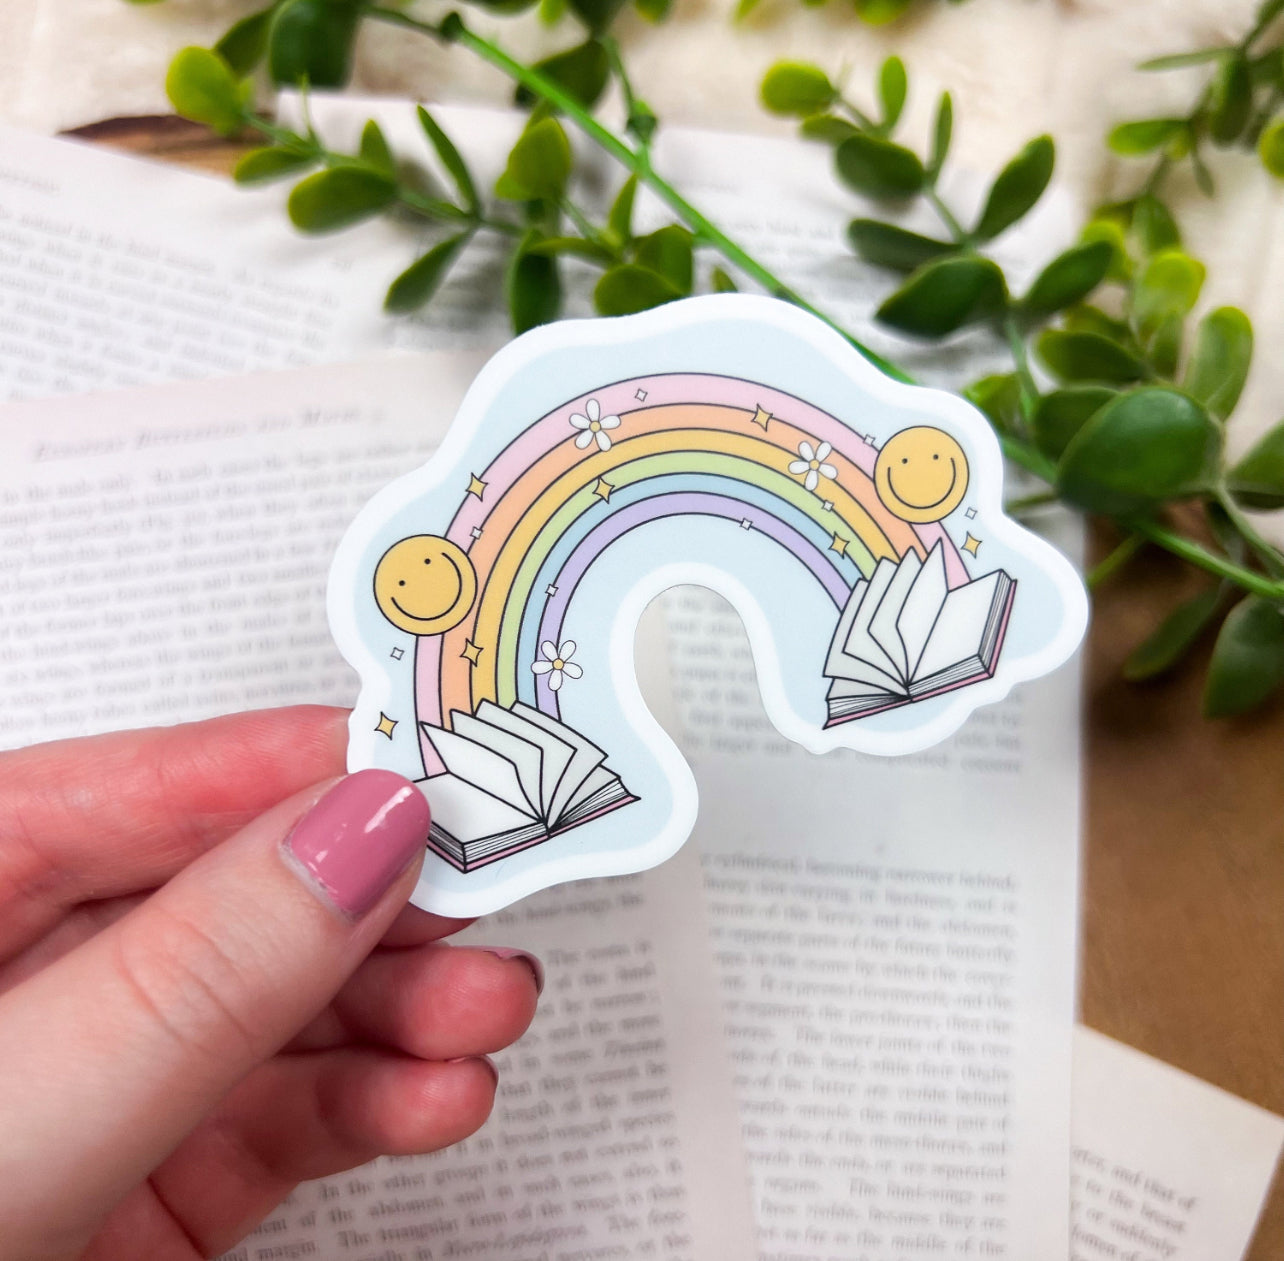 Rainbow Cloud Sticker